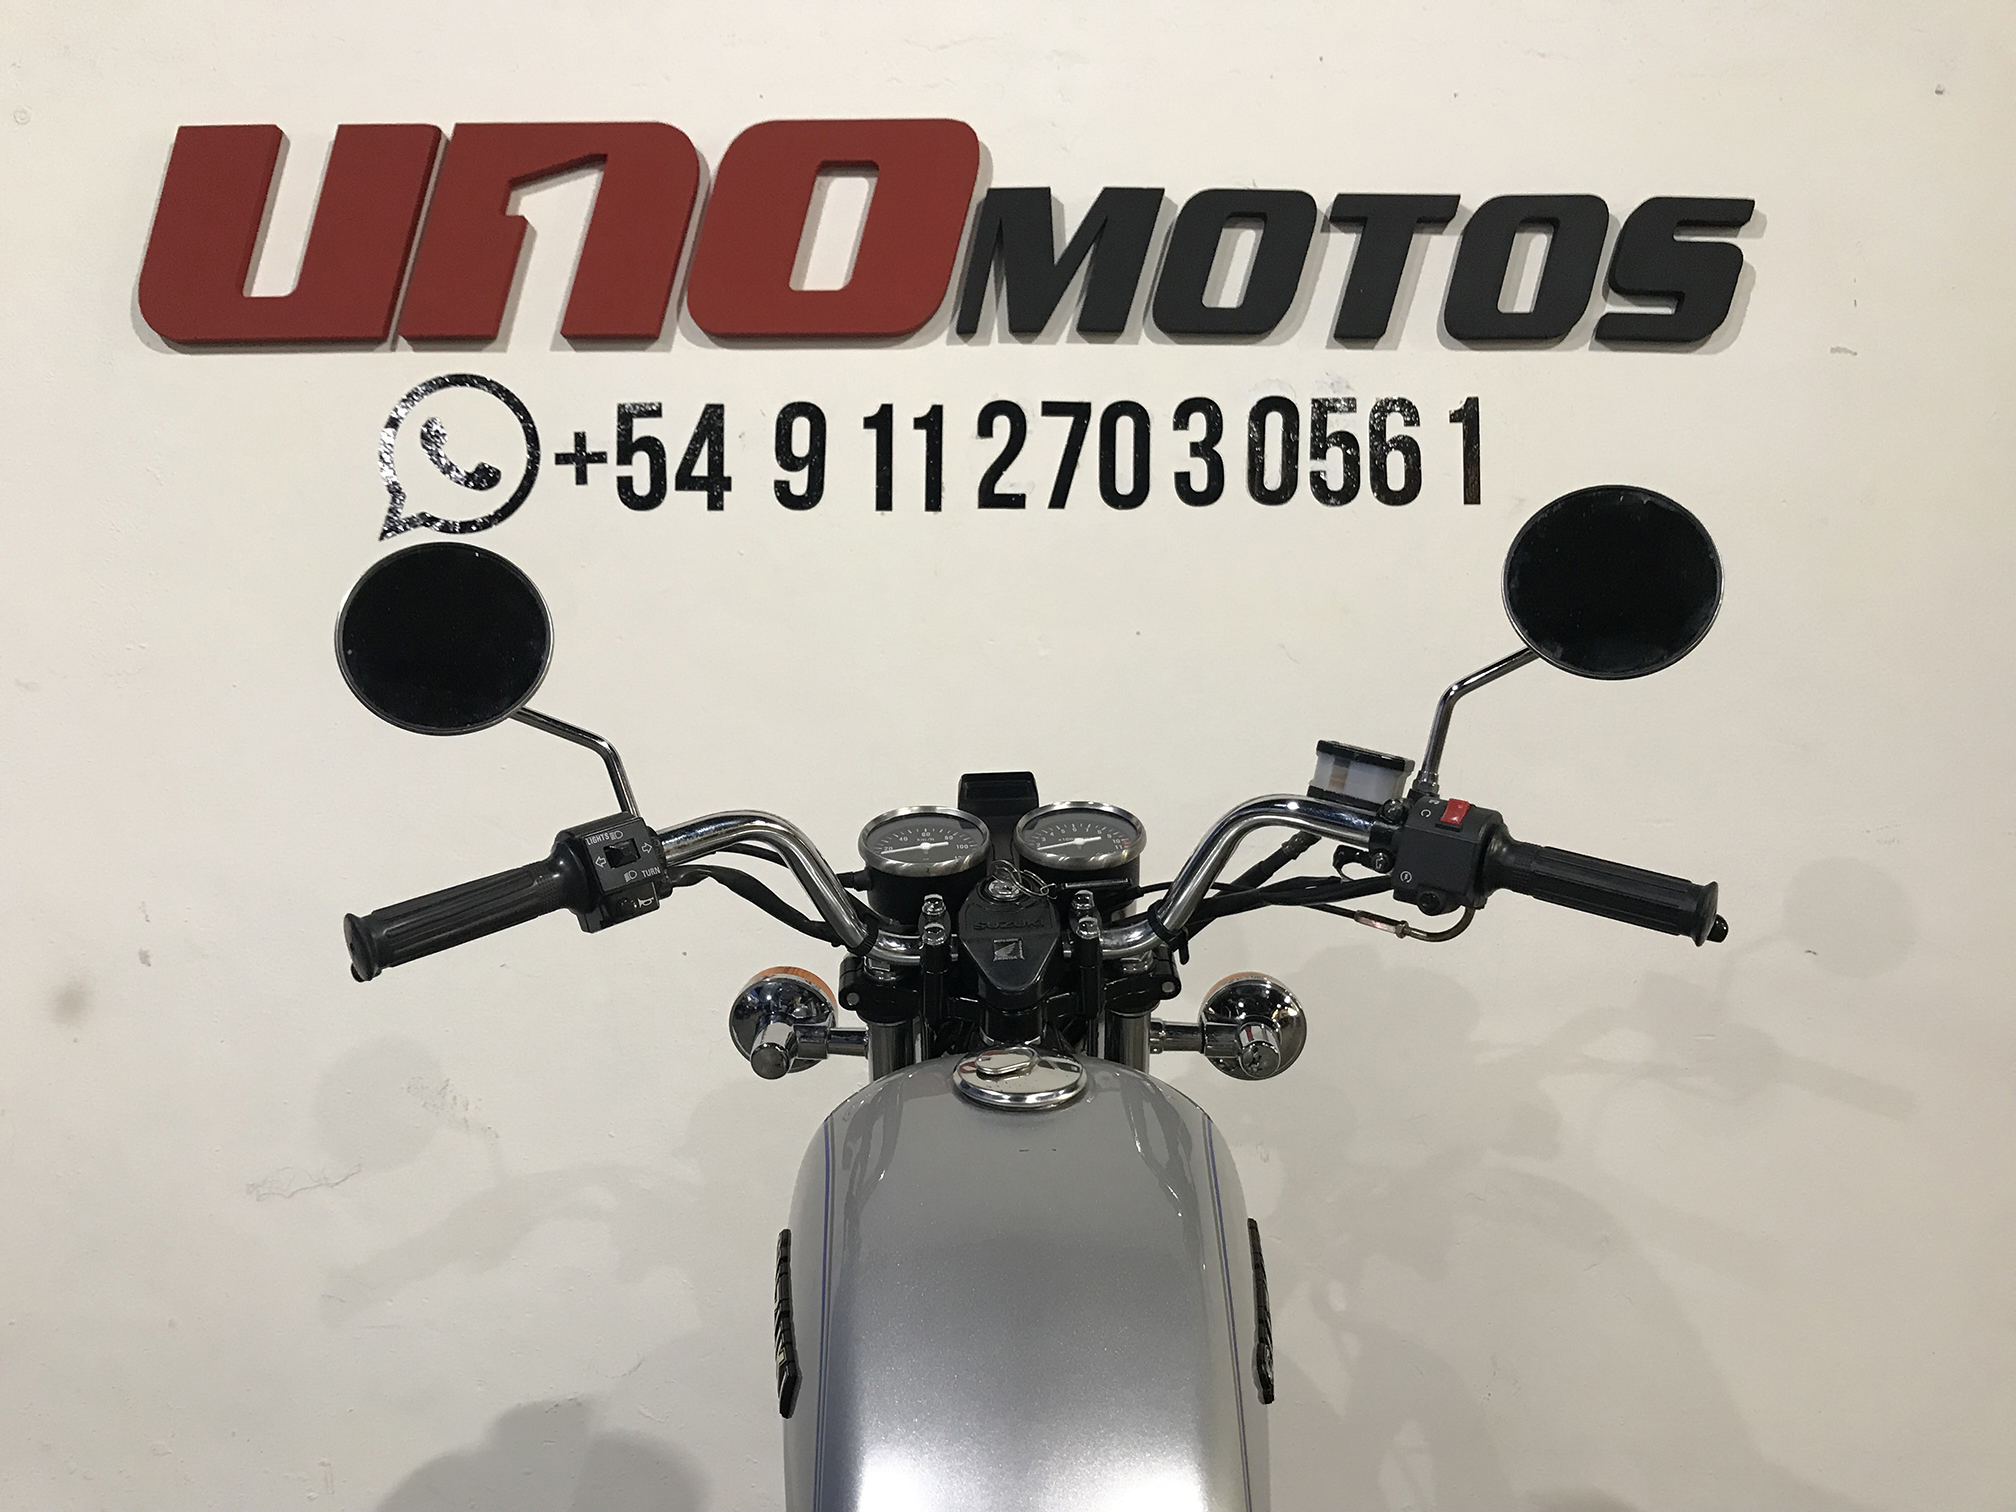 Moto Suzuki Gn 125 G usado 2015 con 3500 km INT 20517